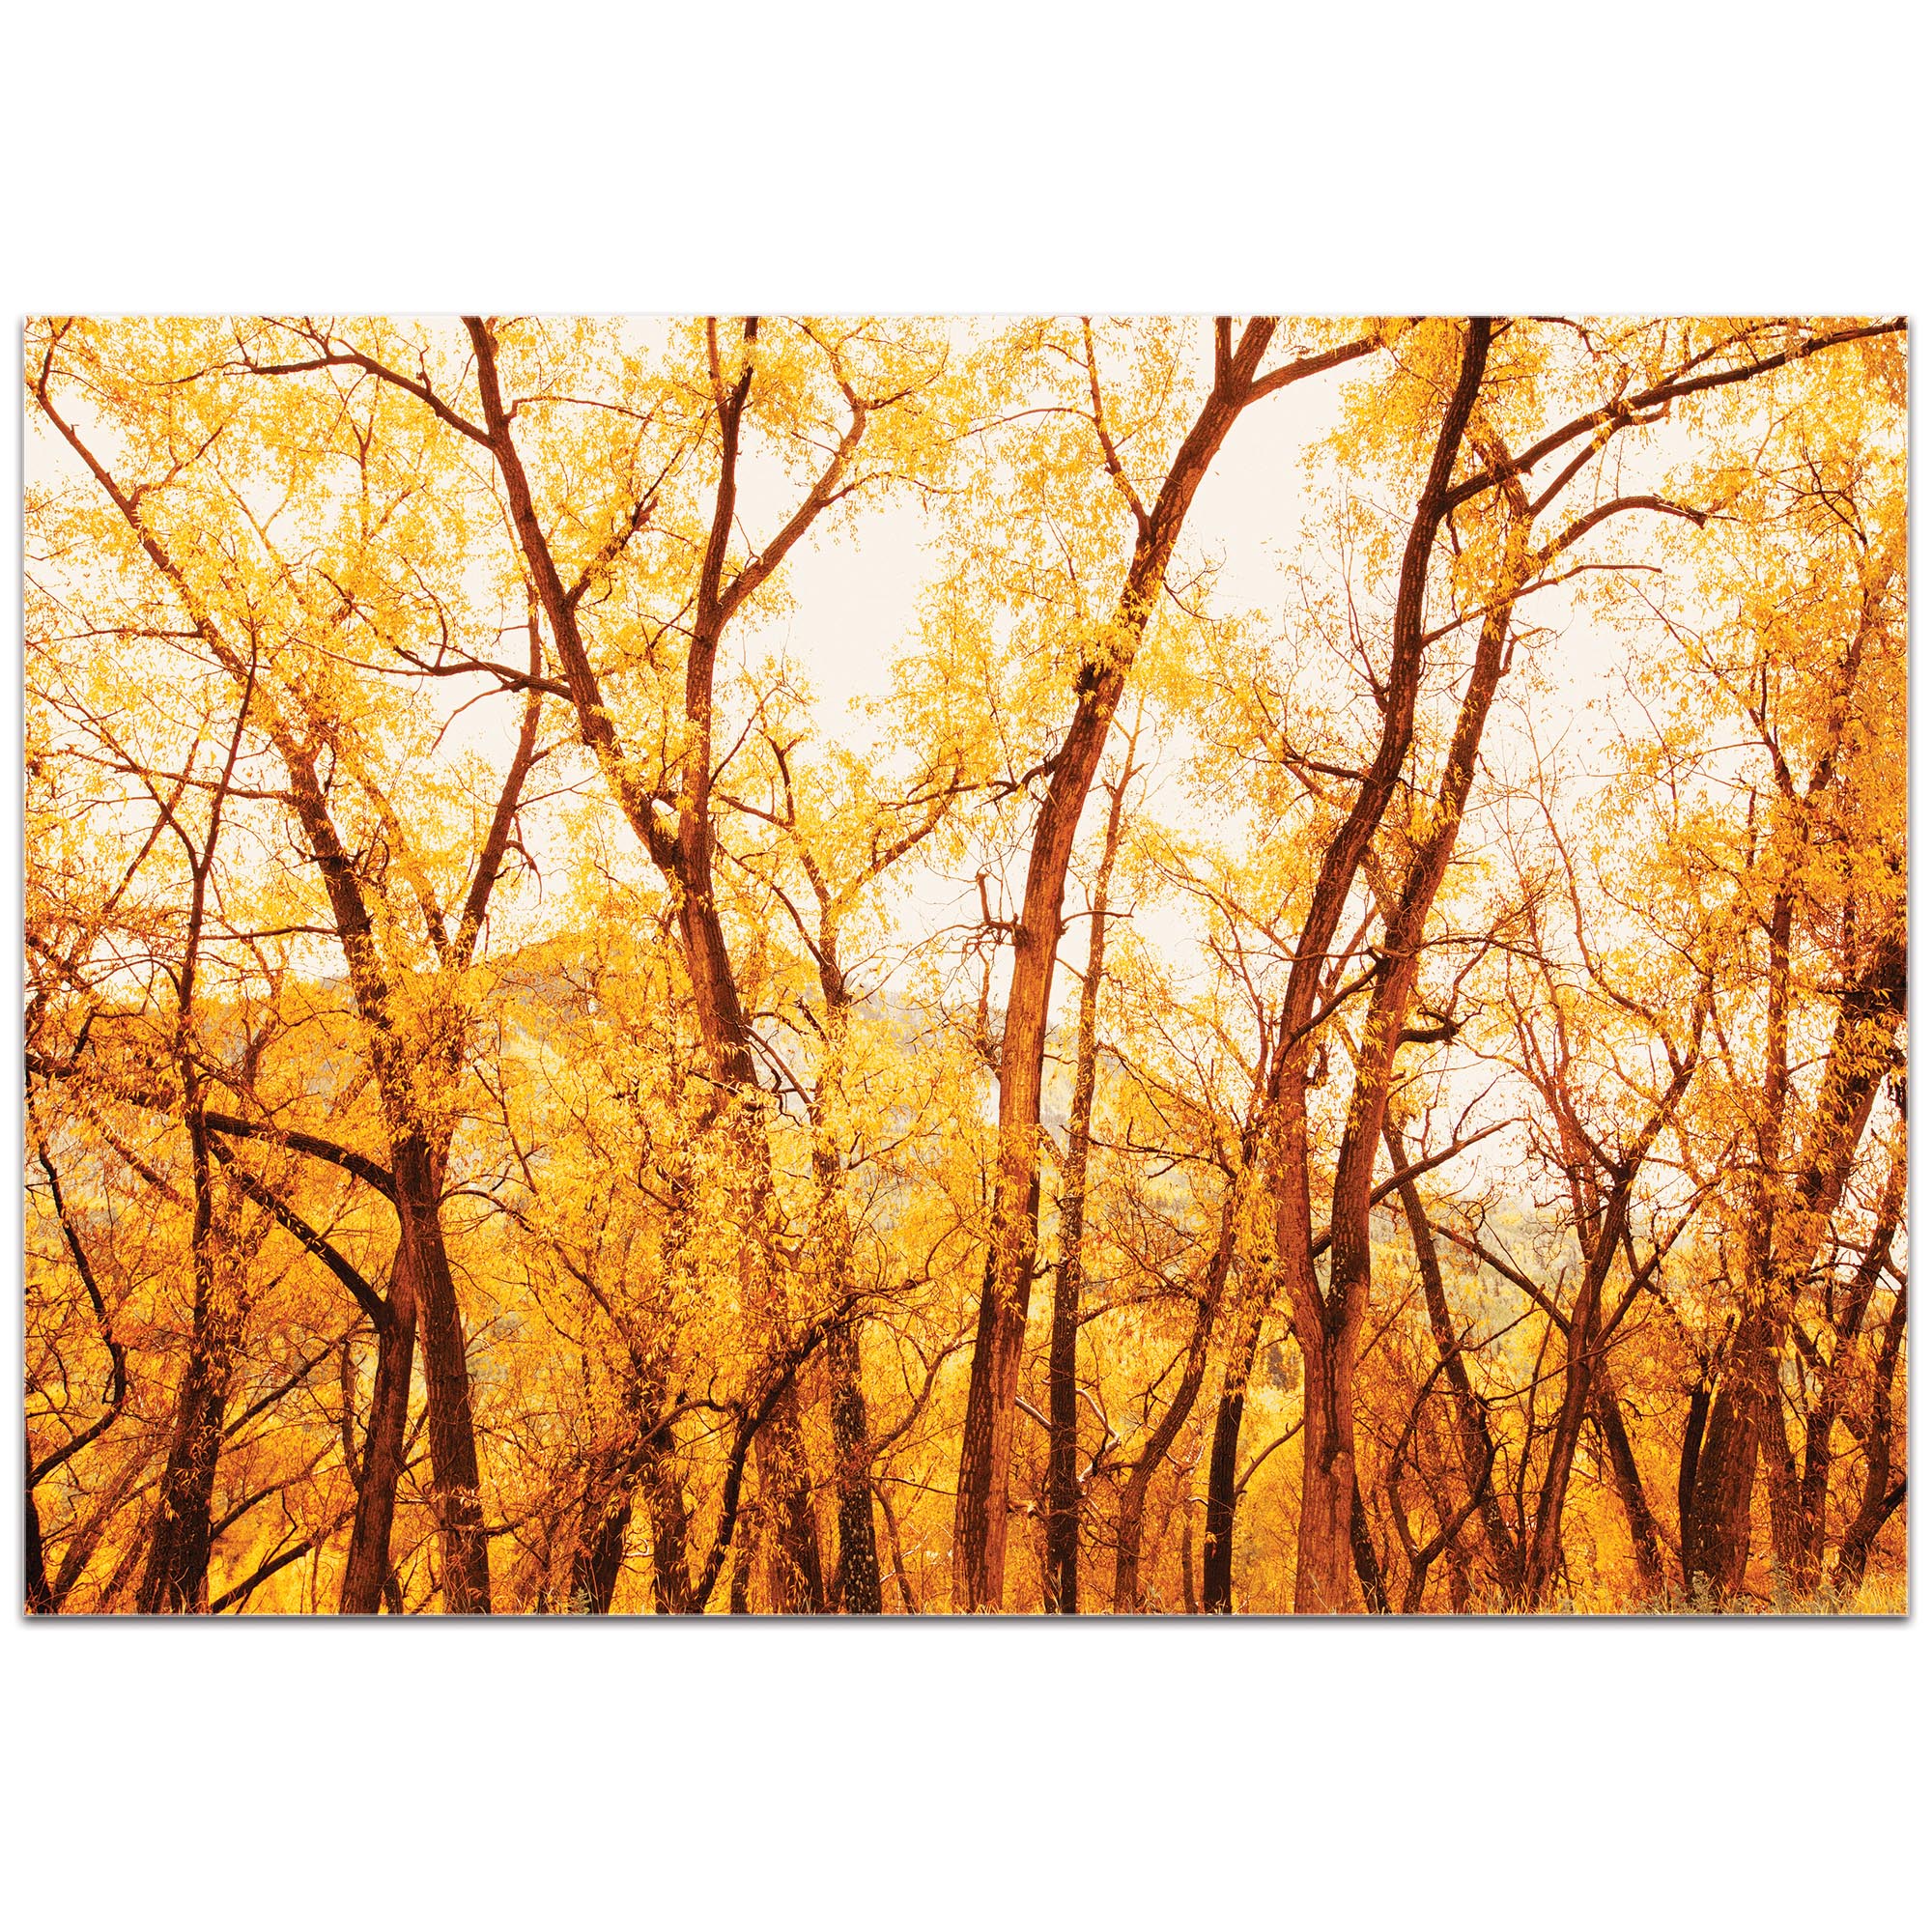 Landscape Photography 'Fall Trees' - Autumn Nature Art on Metal or Plexiglass - Image 2